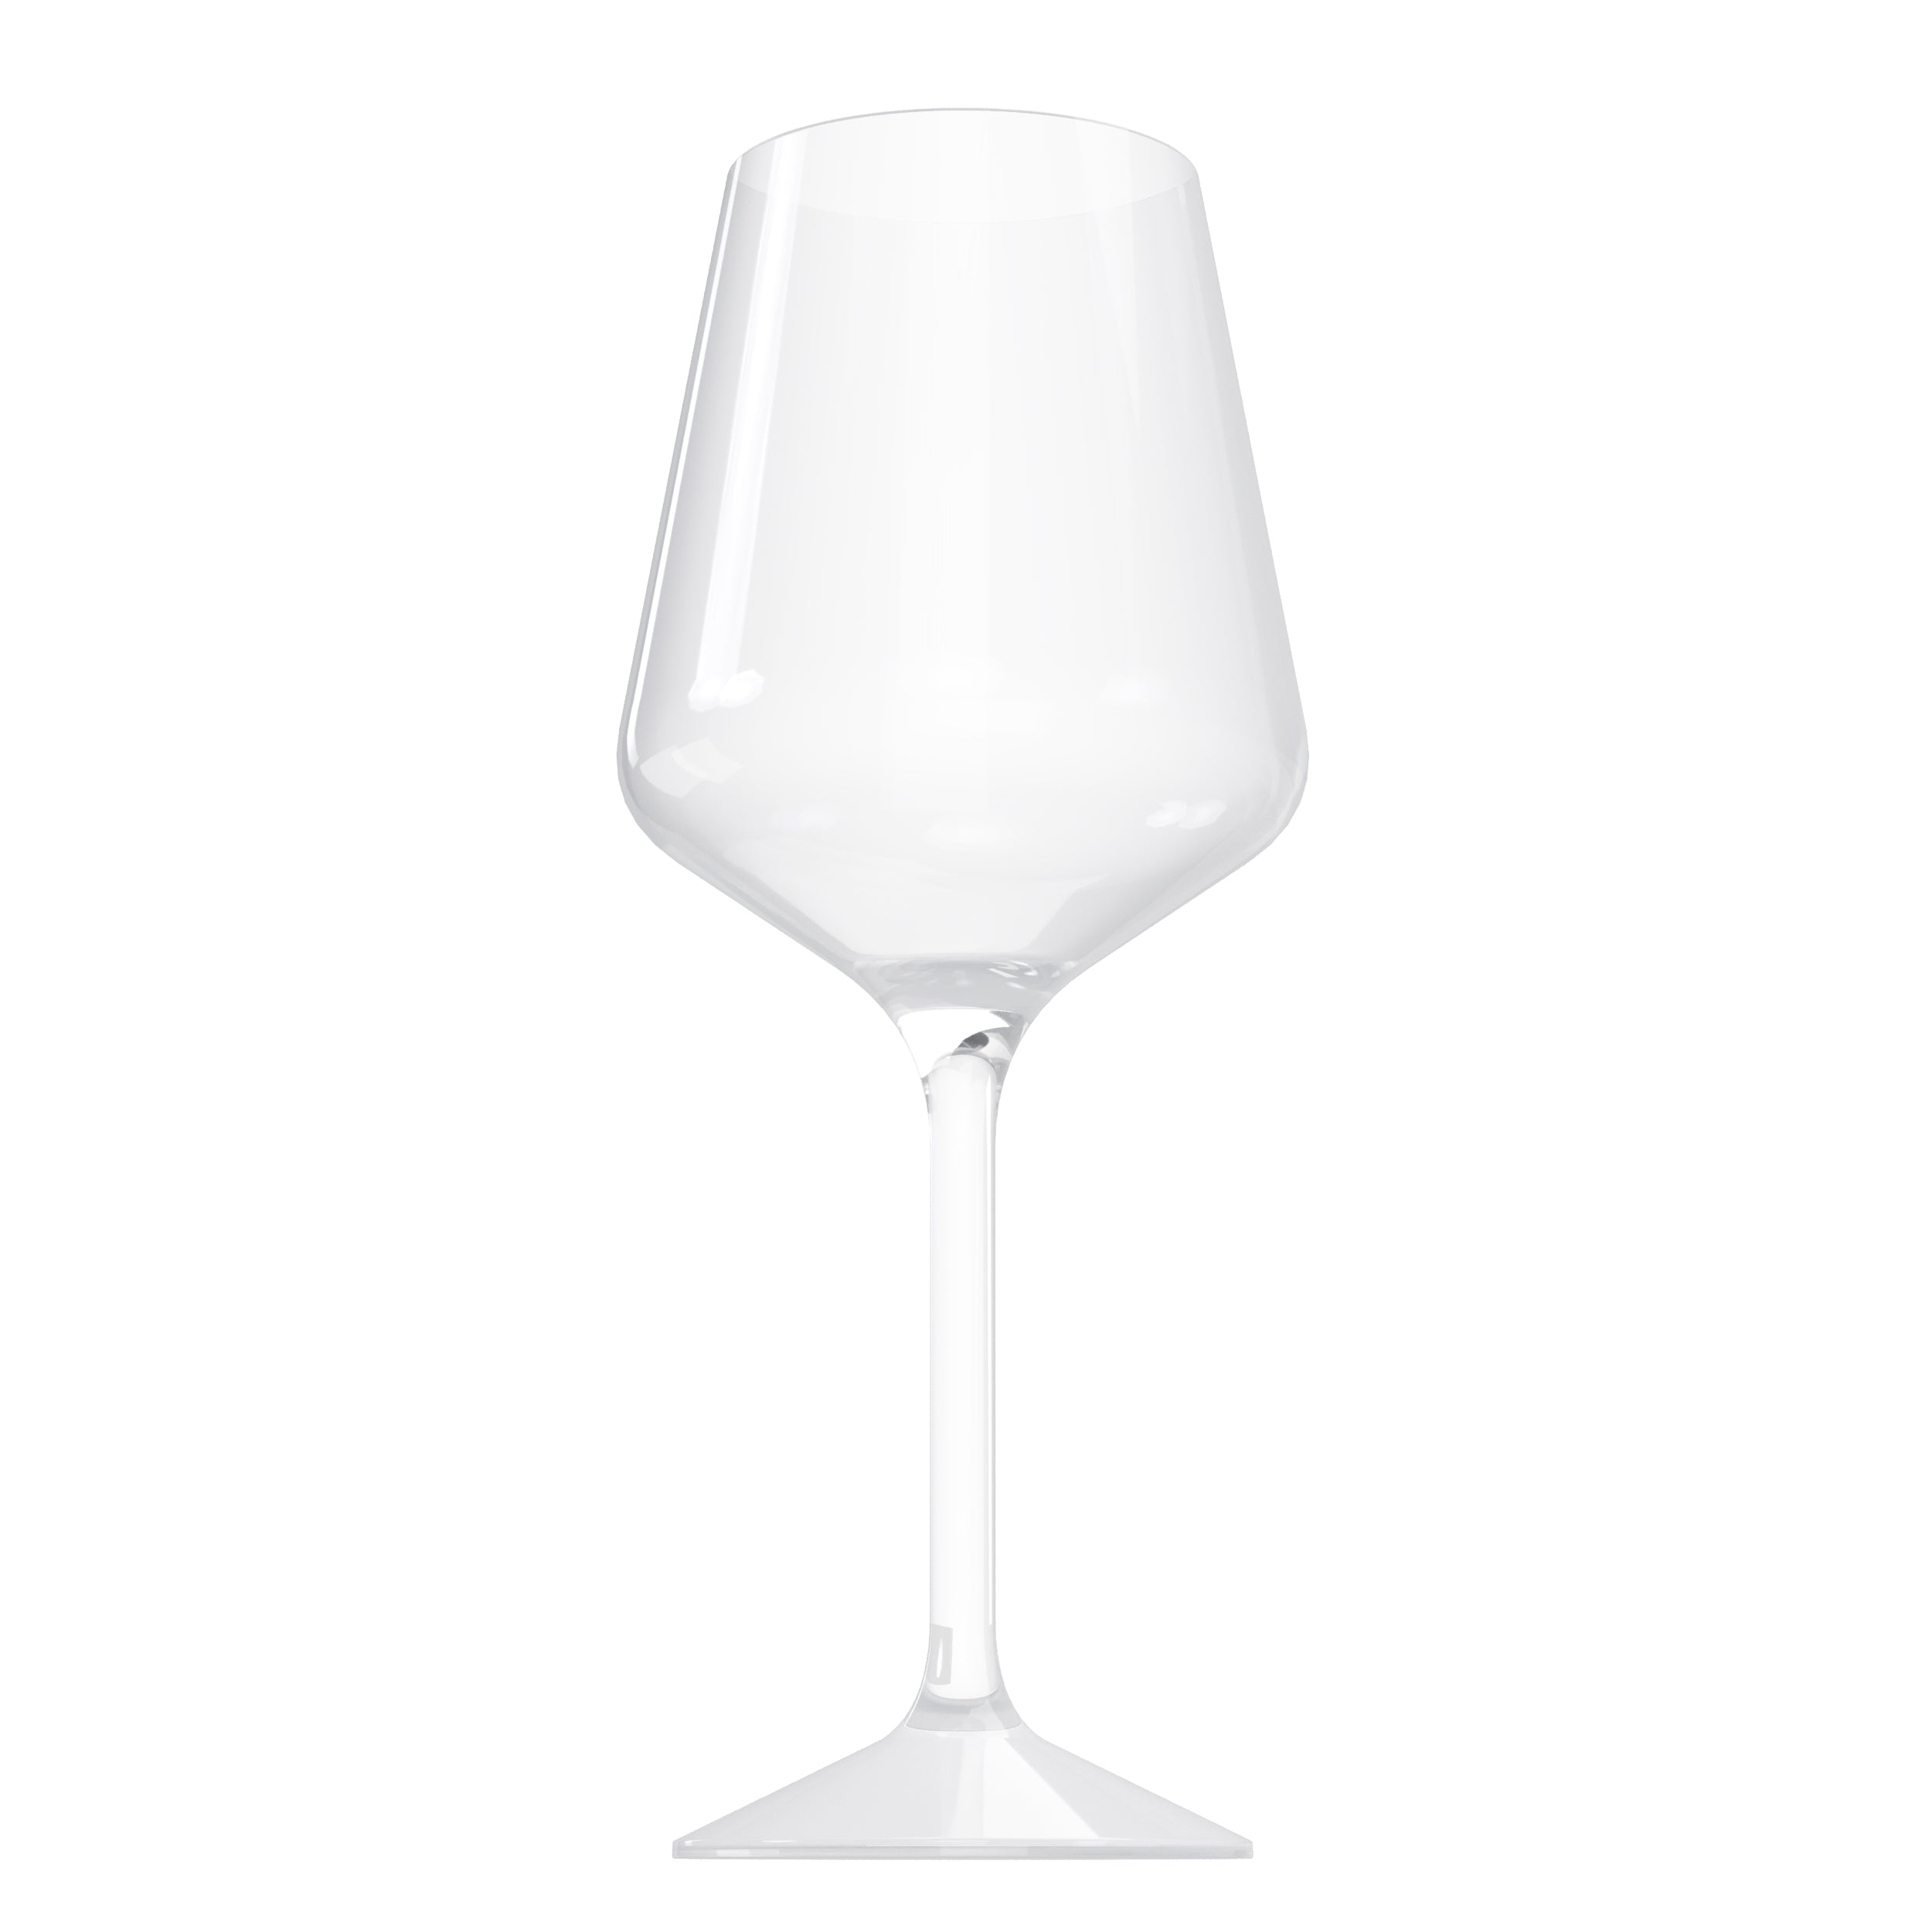 Reusable 16 Oz. Clear Stemmed Wine Glasses | 12 Count